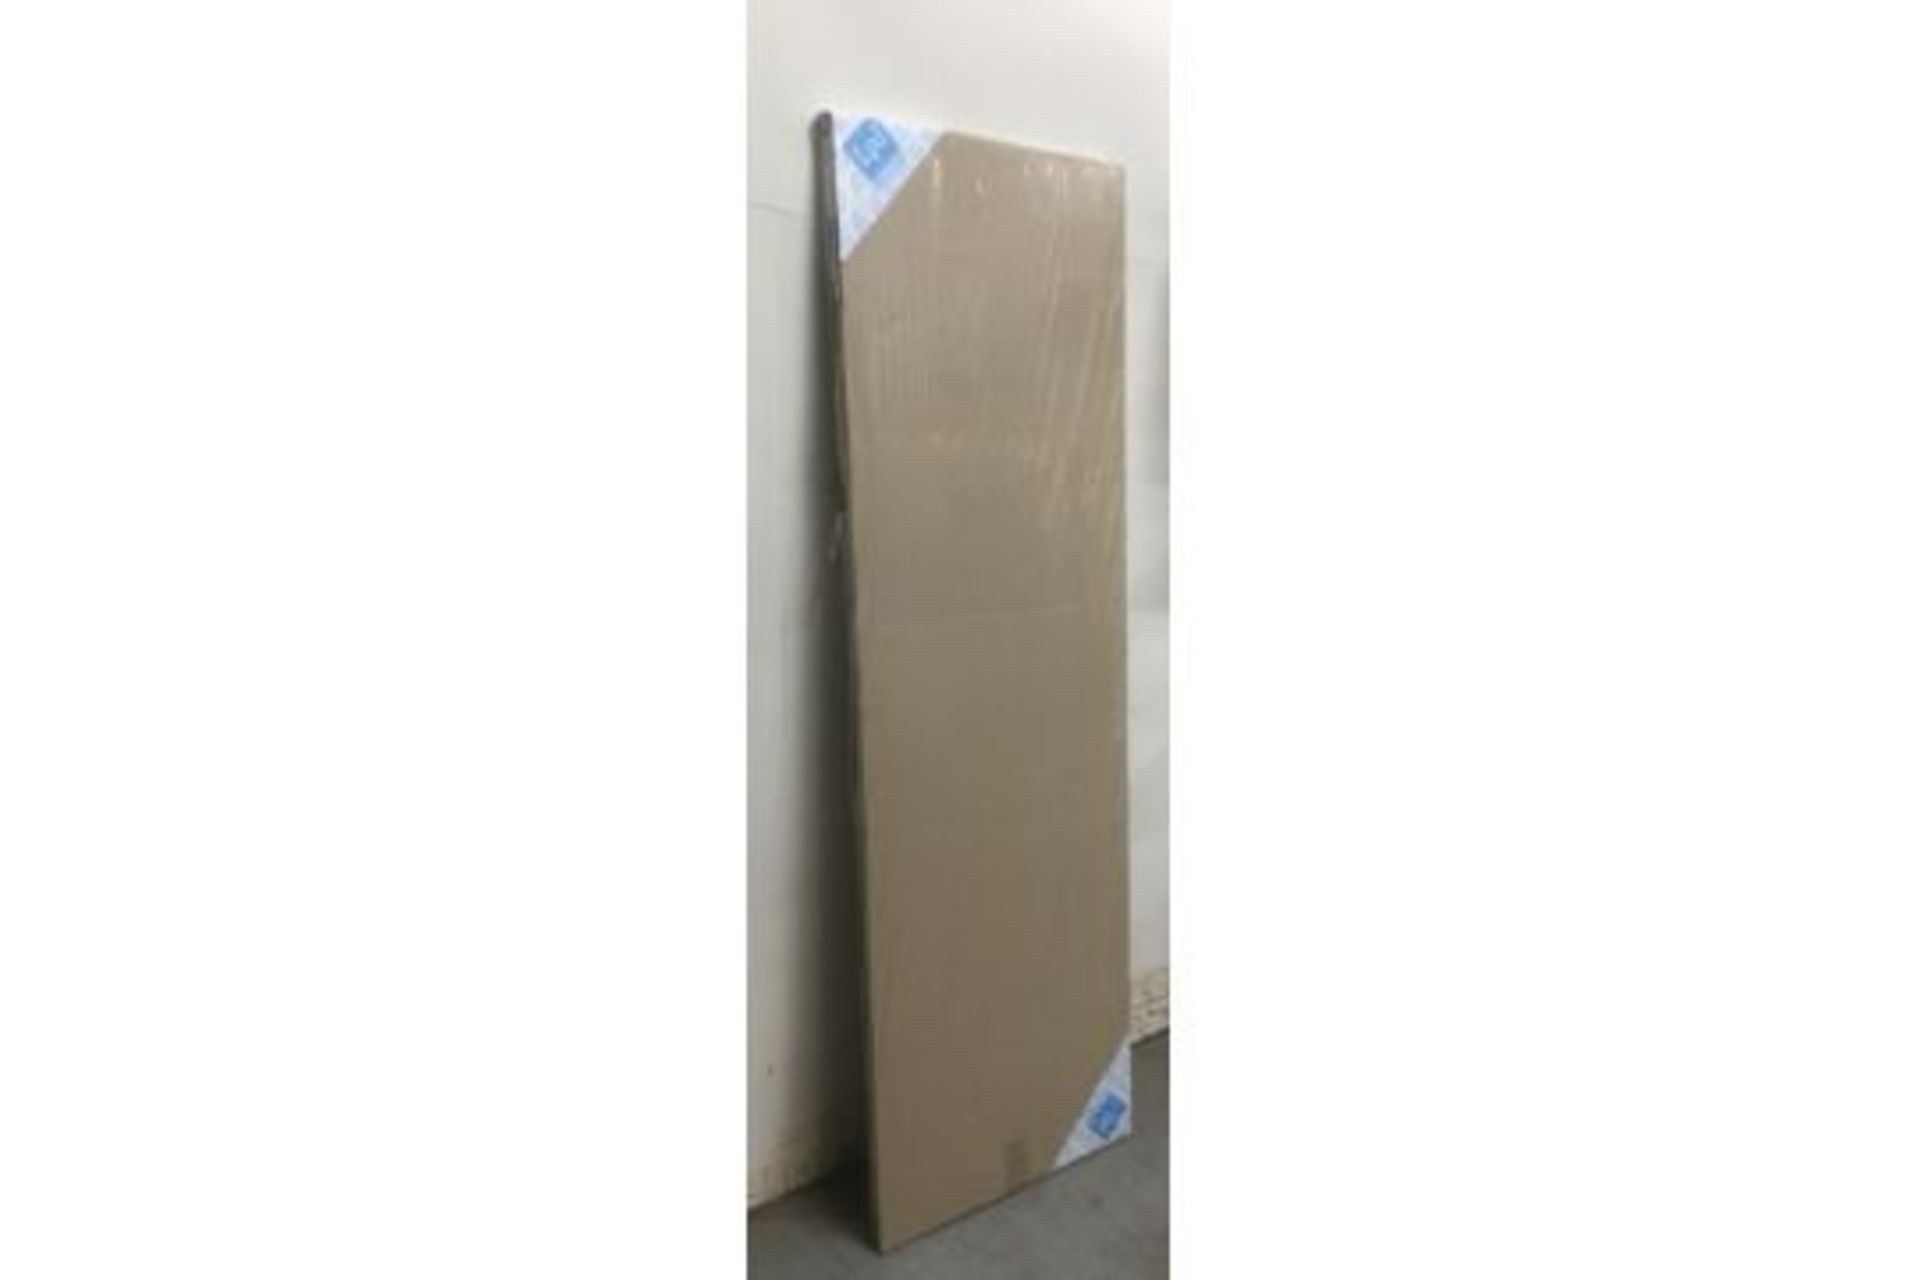 LPDDoors Pre-Finished Oak Mexicano Internal Door | 1981mm x 610mm x 35mm - Image 2 of 3